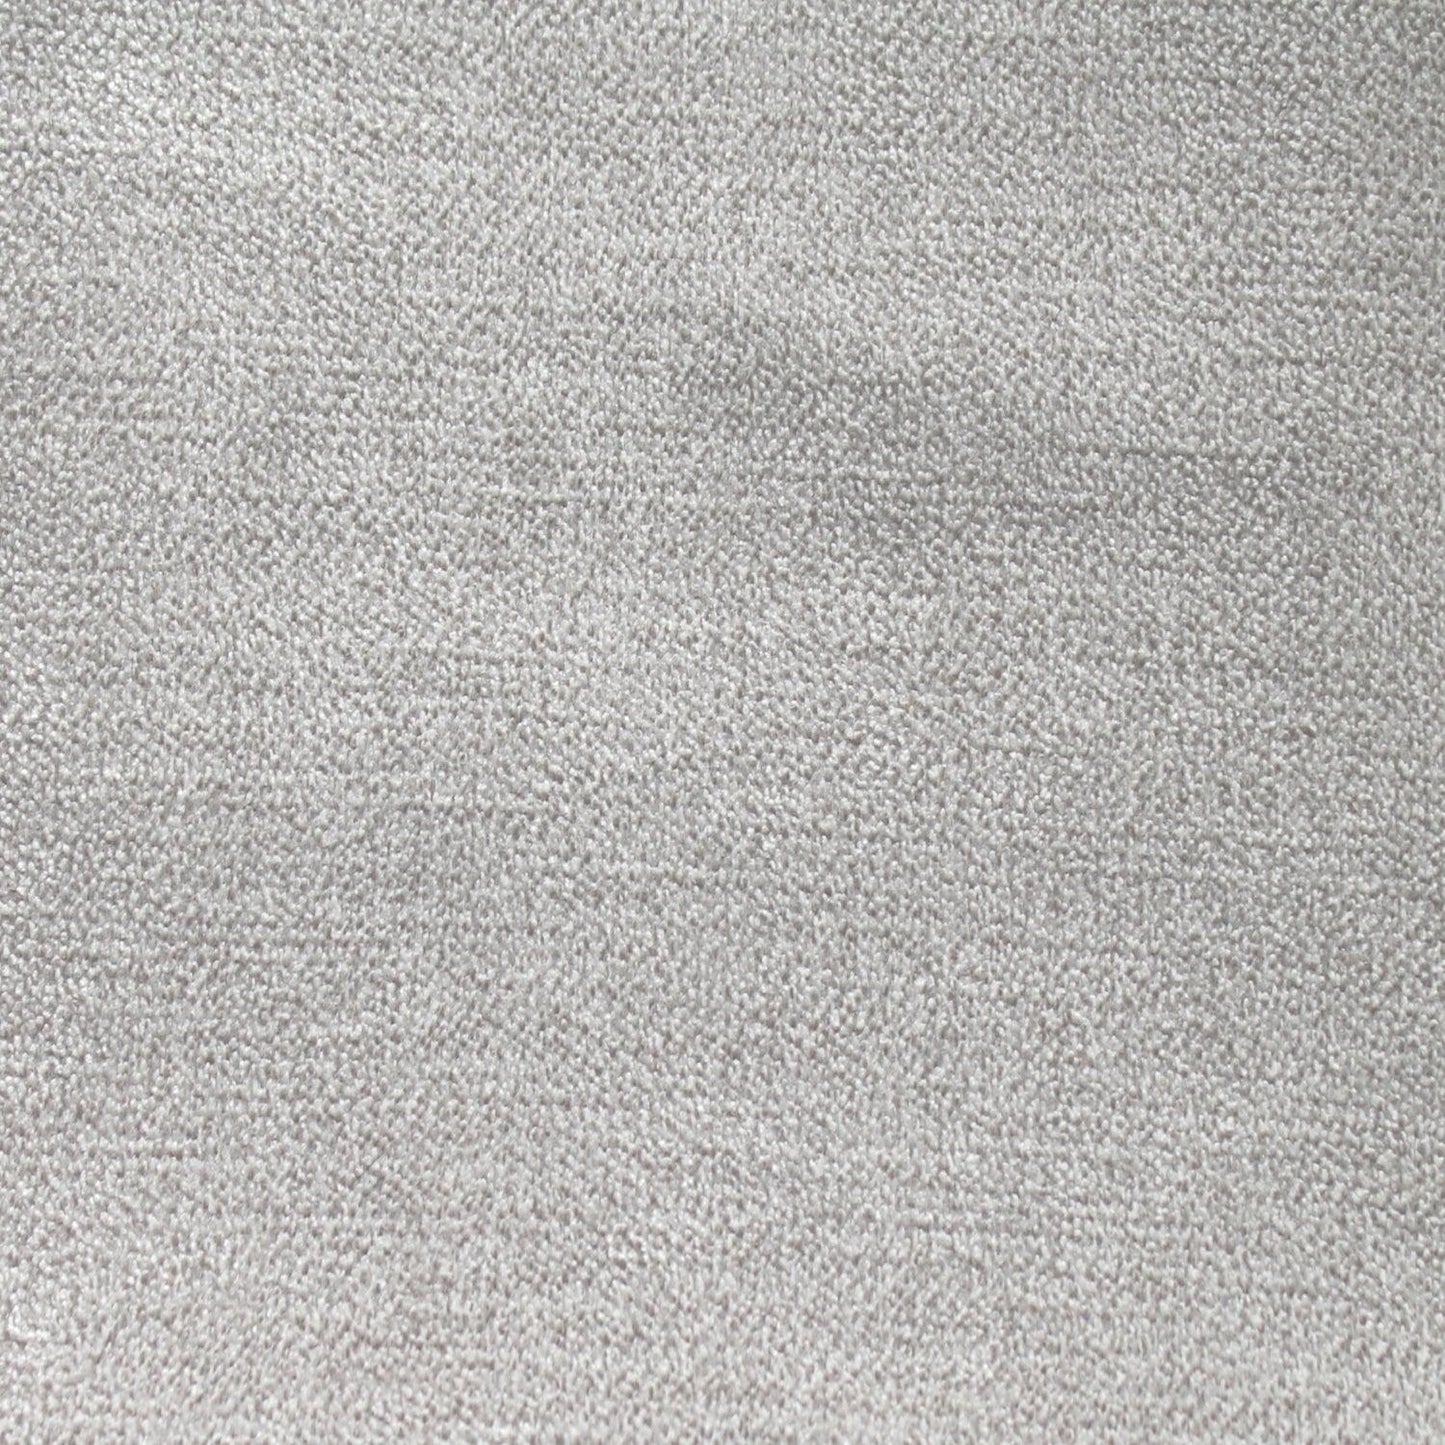 Chenille Upholstery Fabric Lulu Pale Grey Mix